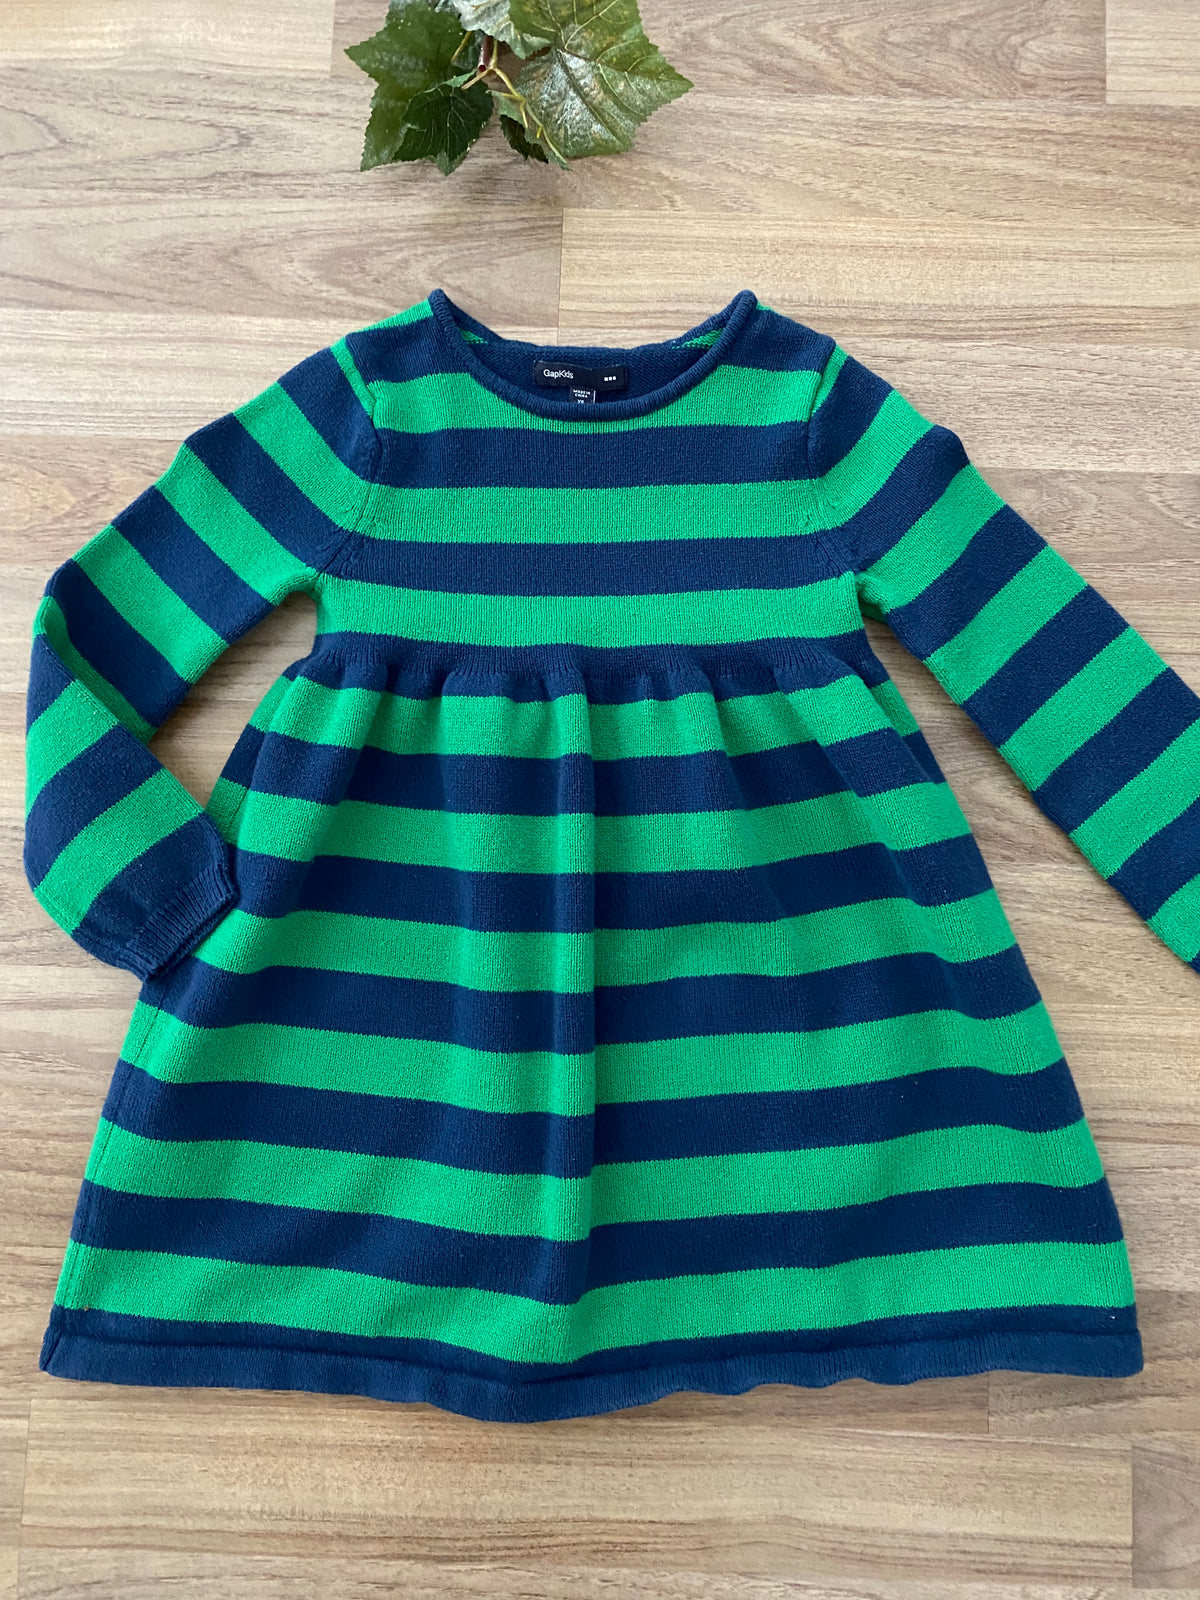 Long Sleeve Tunic Sweater (Girls Size 4-5)